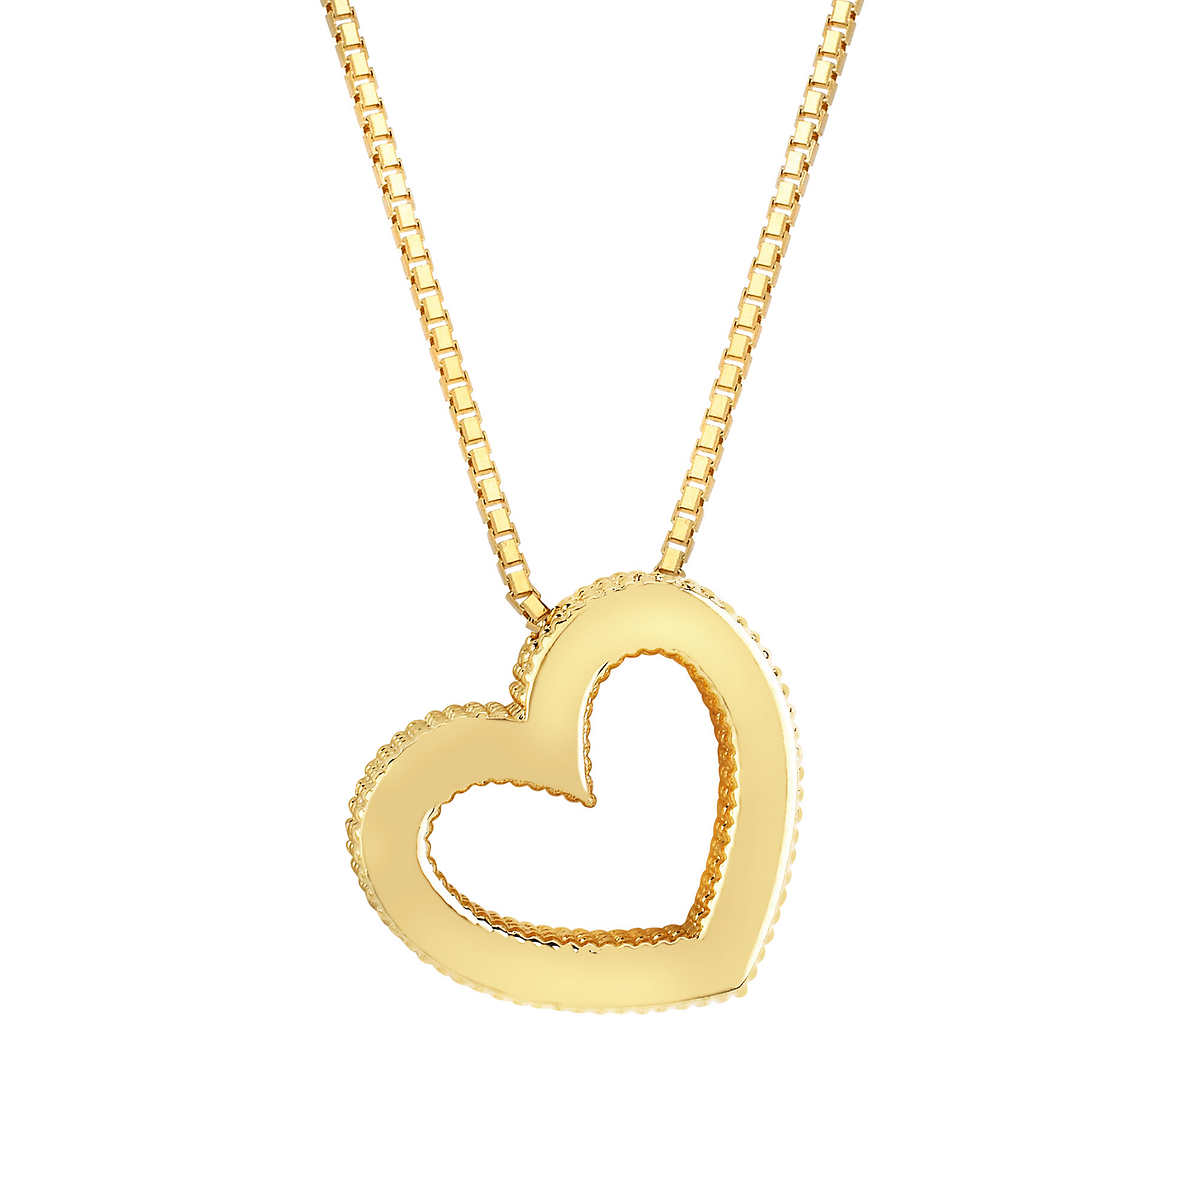 Triple Layear pad lock chain for girls &women Gold chain Heart